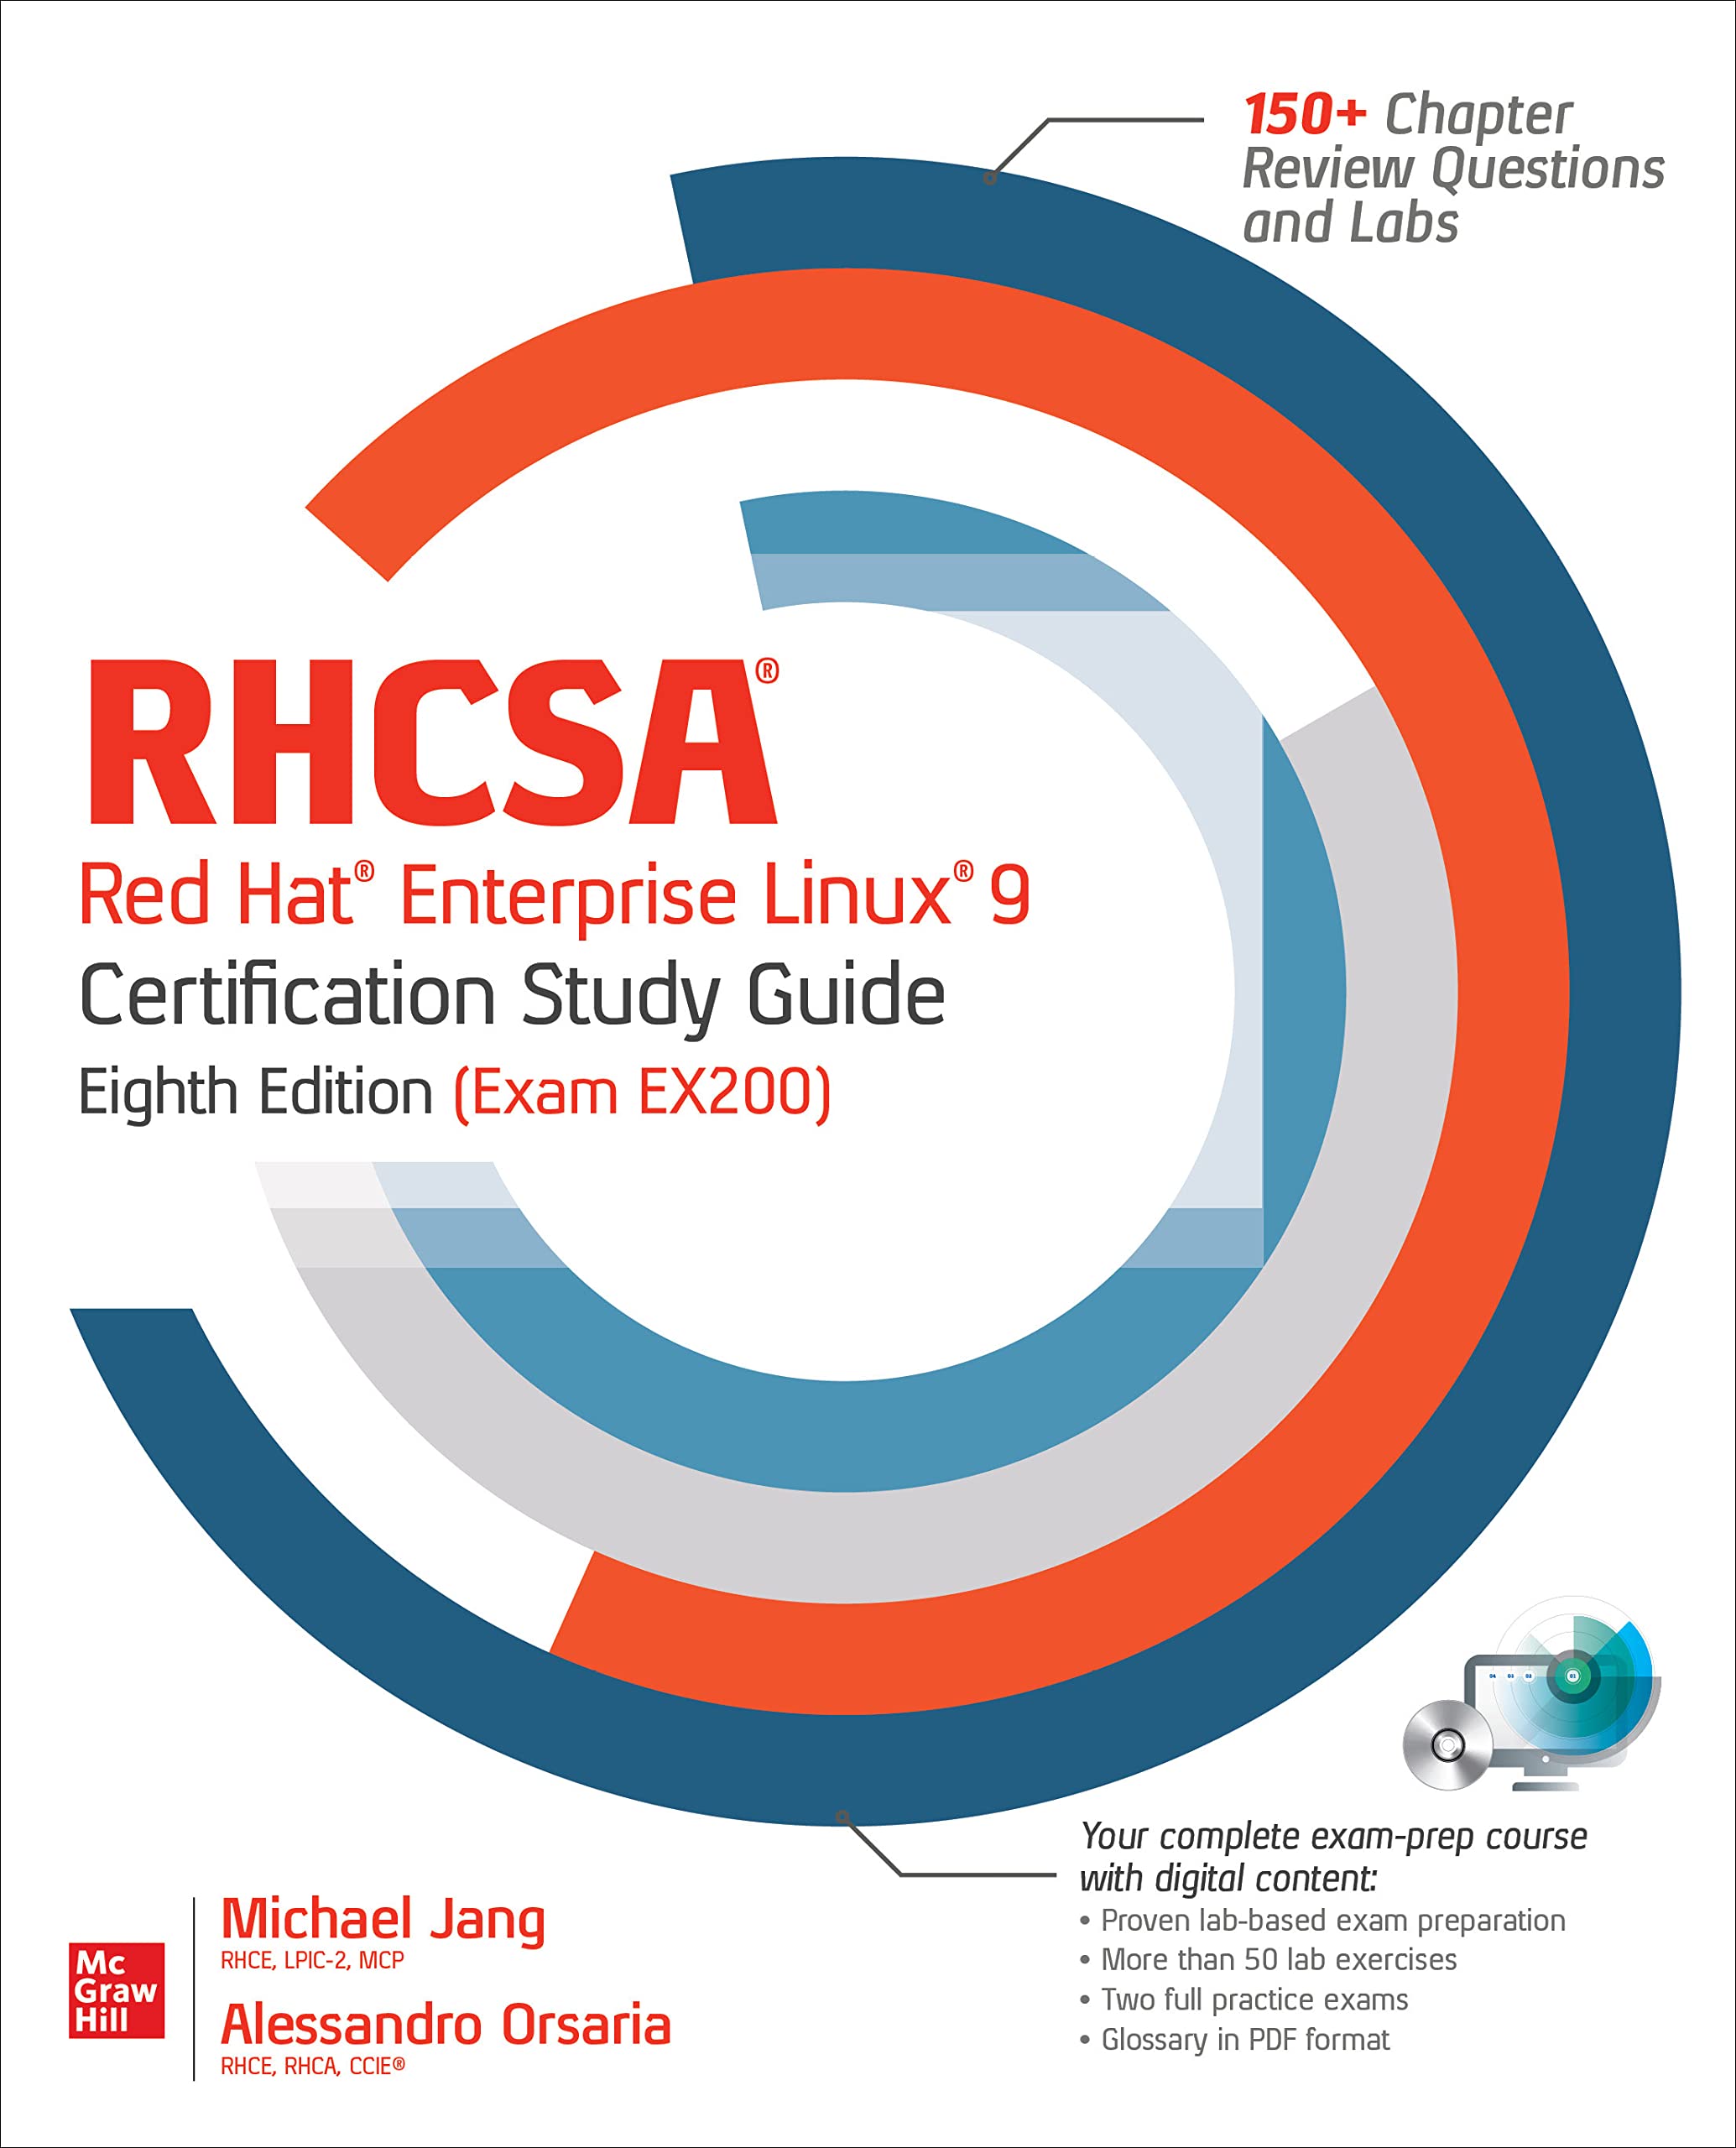 RHCSA Red Hat Enterprise Linux 9 Certification Study Guide, Eighth Edition (Exam EX200) (RHCSA/RHCE Red Hat Enterprise Linux Certification Study Guide, 9)